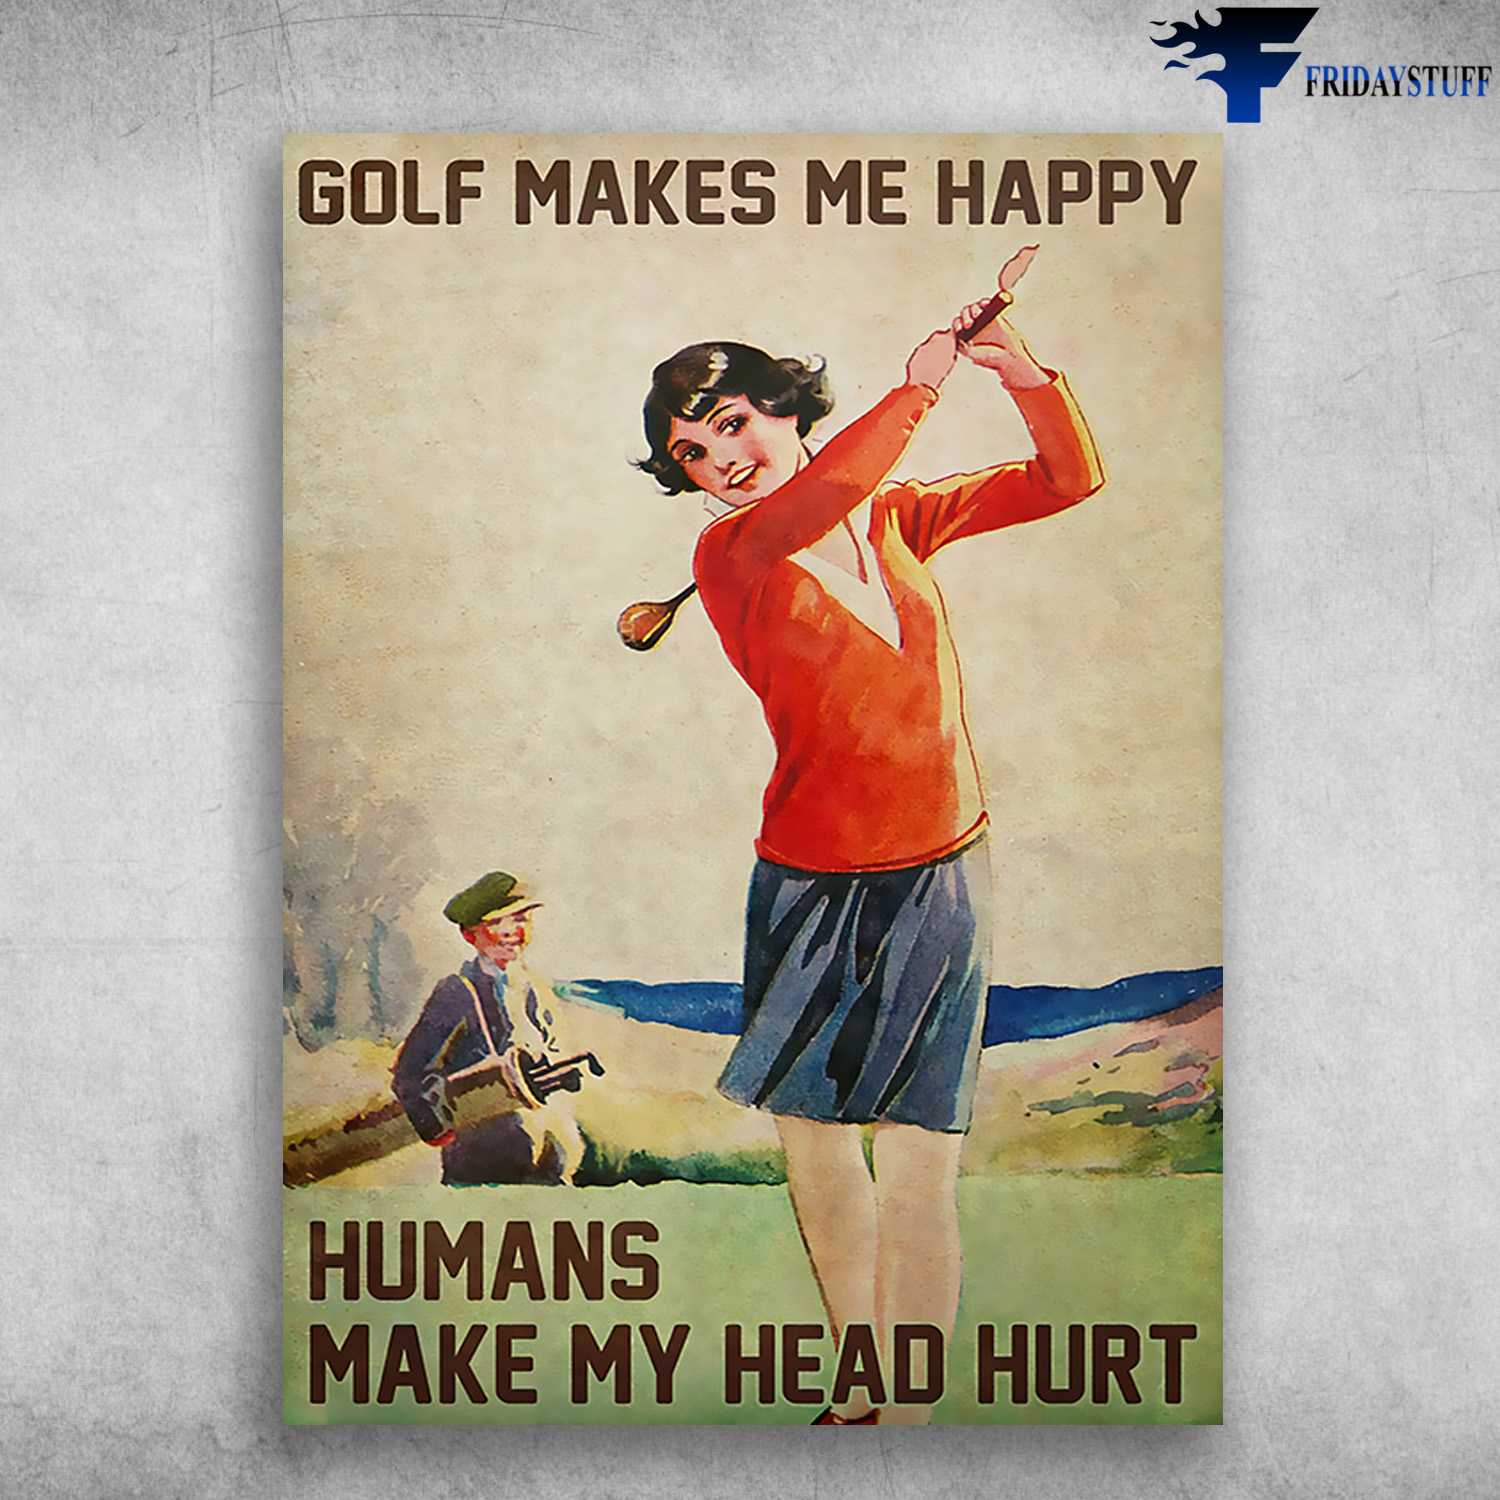 Golf Player, Lady Plays Golf, Golf Makes Me Happy, Human Make My Head Hurt